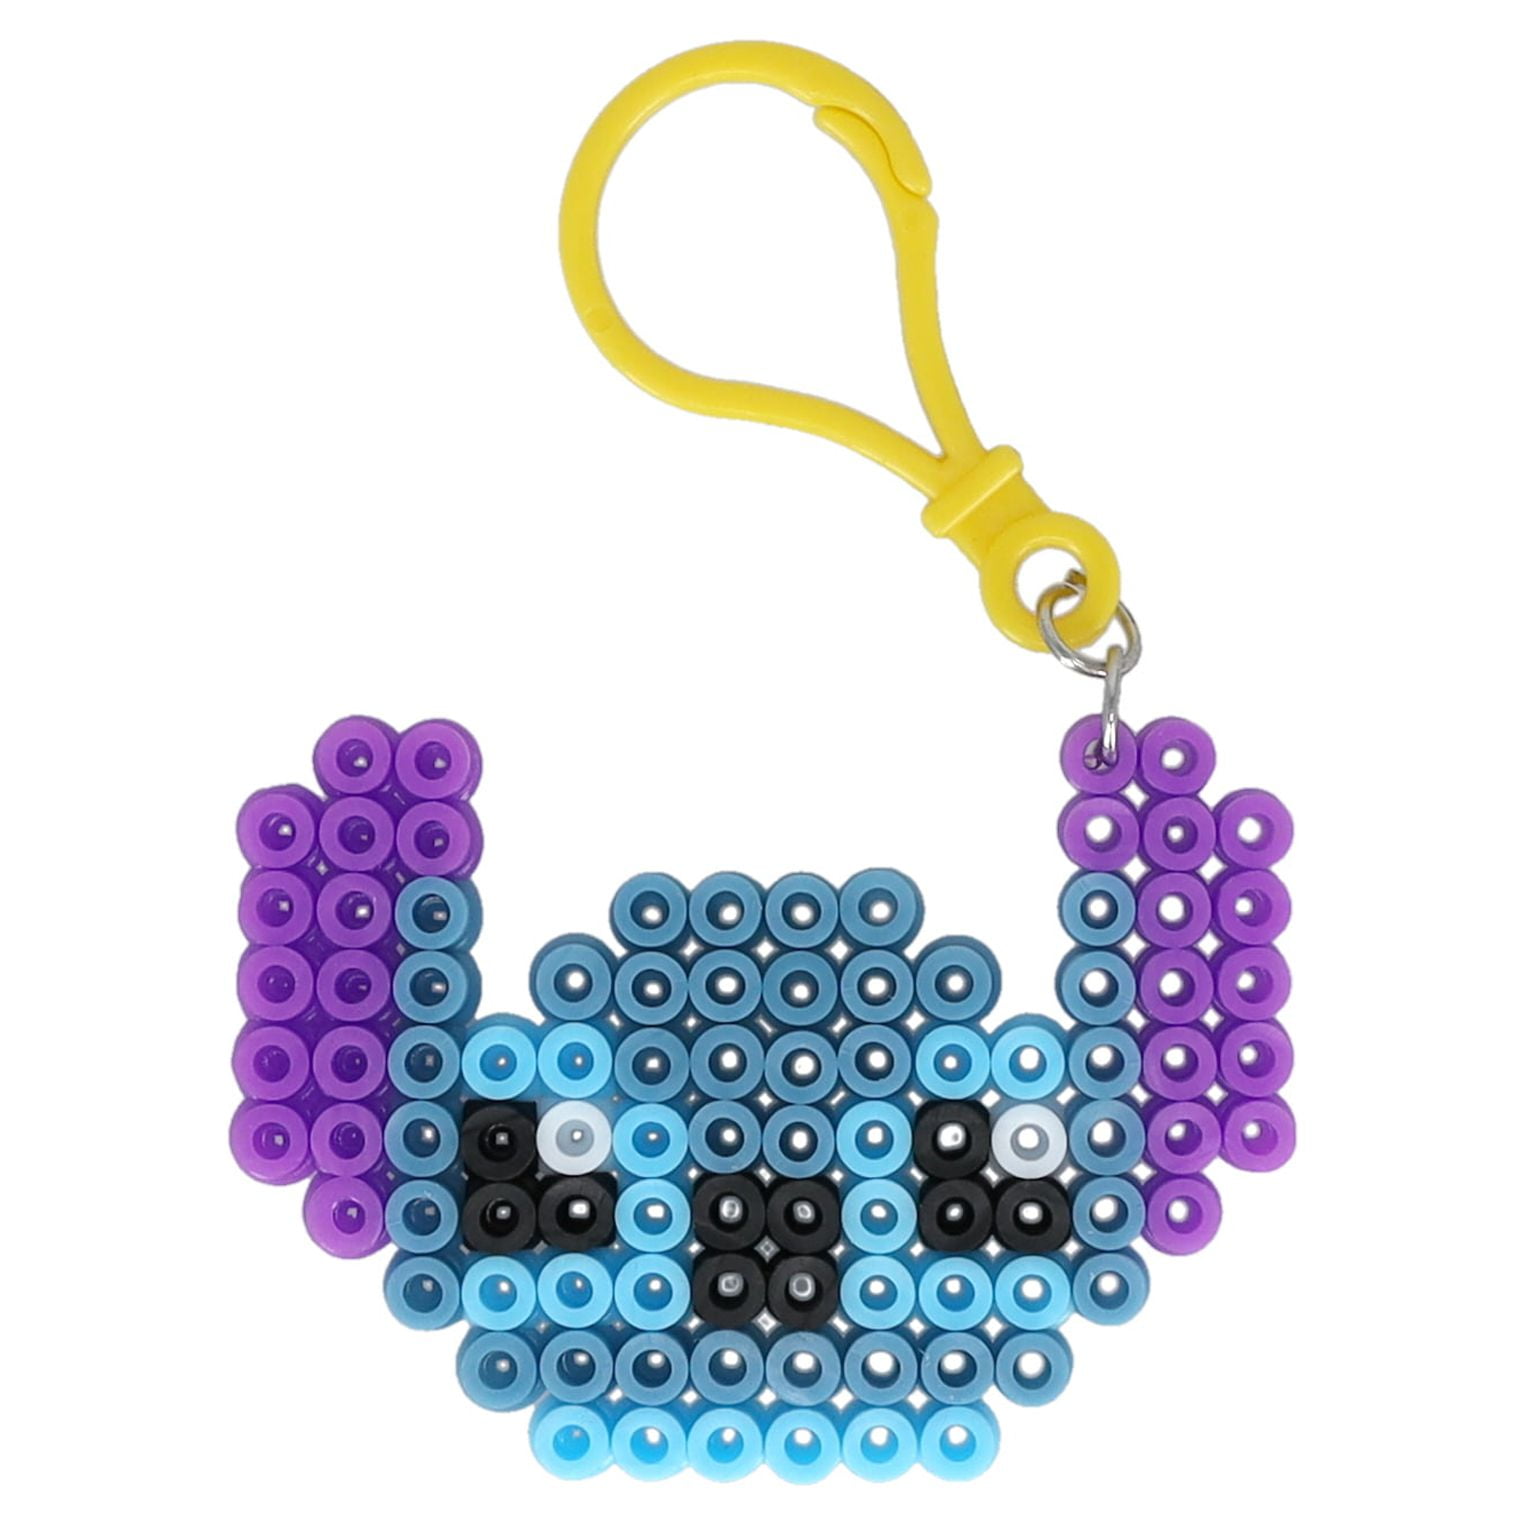 Stitch Melty Beads Pixel Art Ornament Kit, Five Below